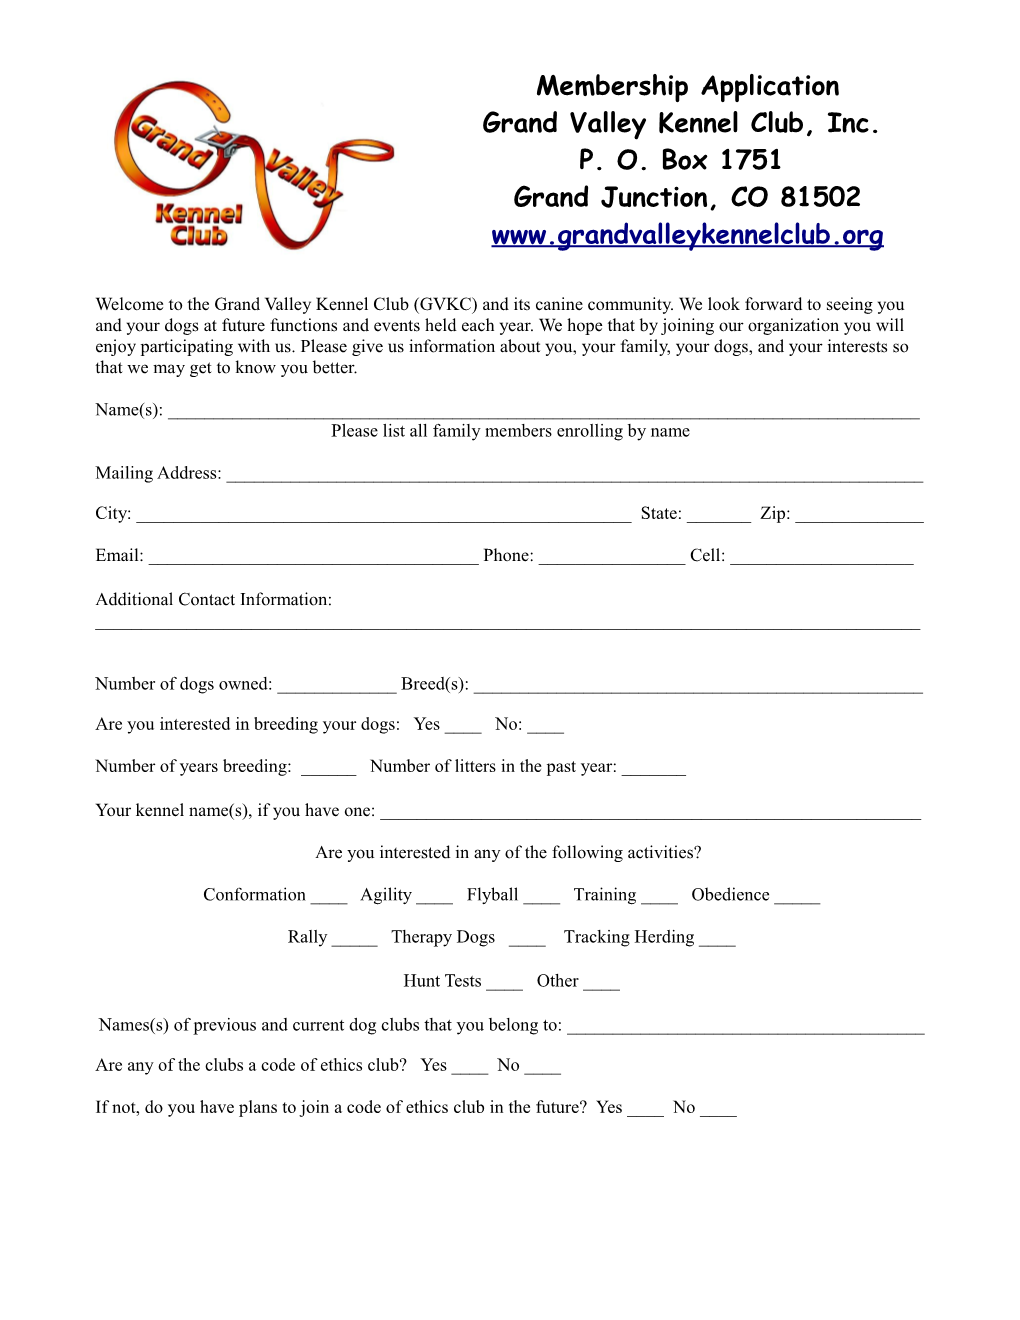 Membership Application Grand Valley Kennel Club, Inc. P. O. Box 1751 Grand Junction, CO 81502